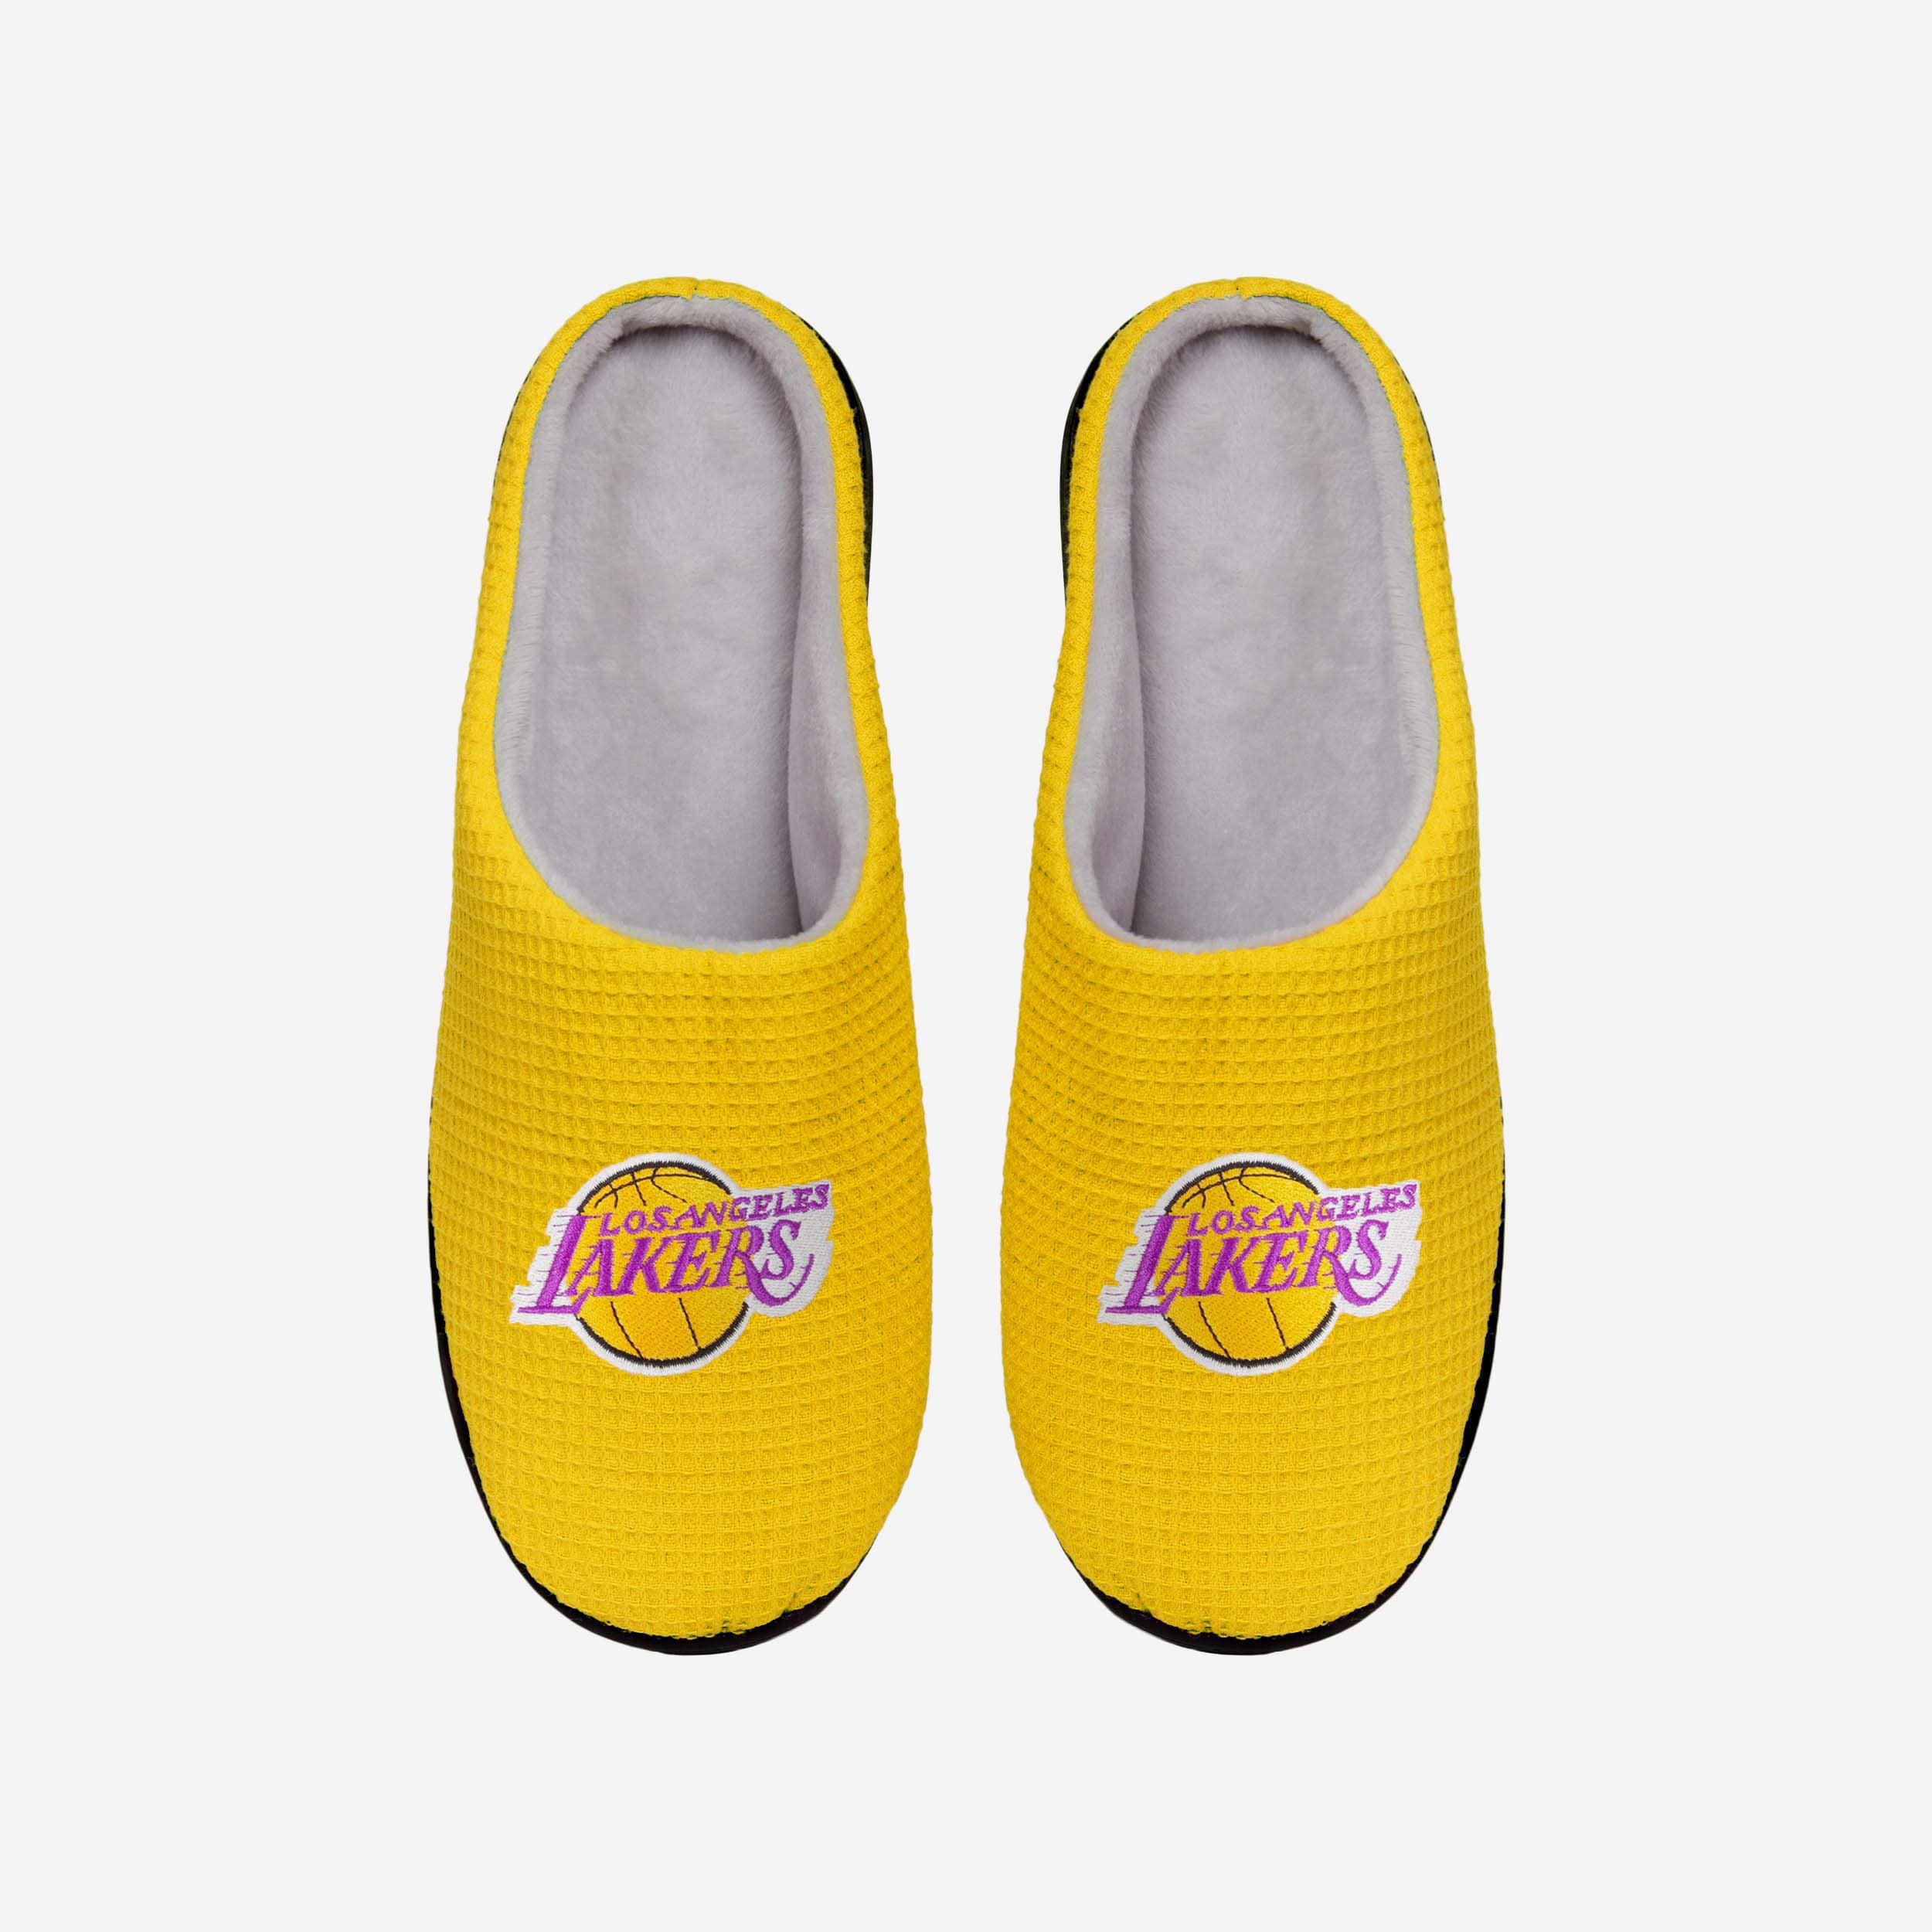 HappyFeet NBA Slippers - Los Angeles Lakers - Small 